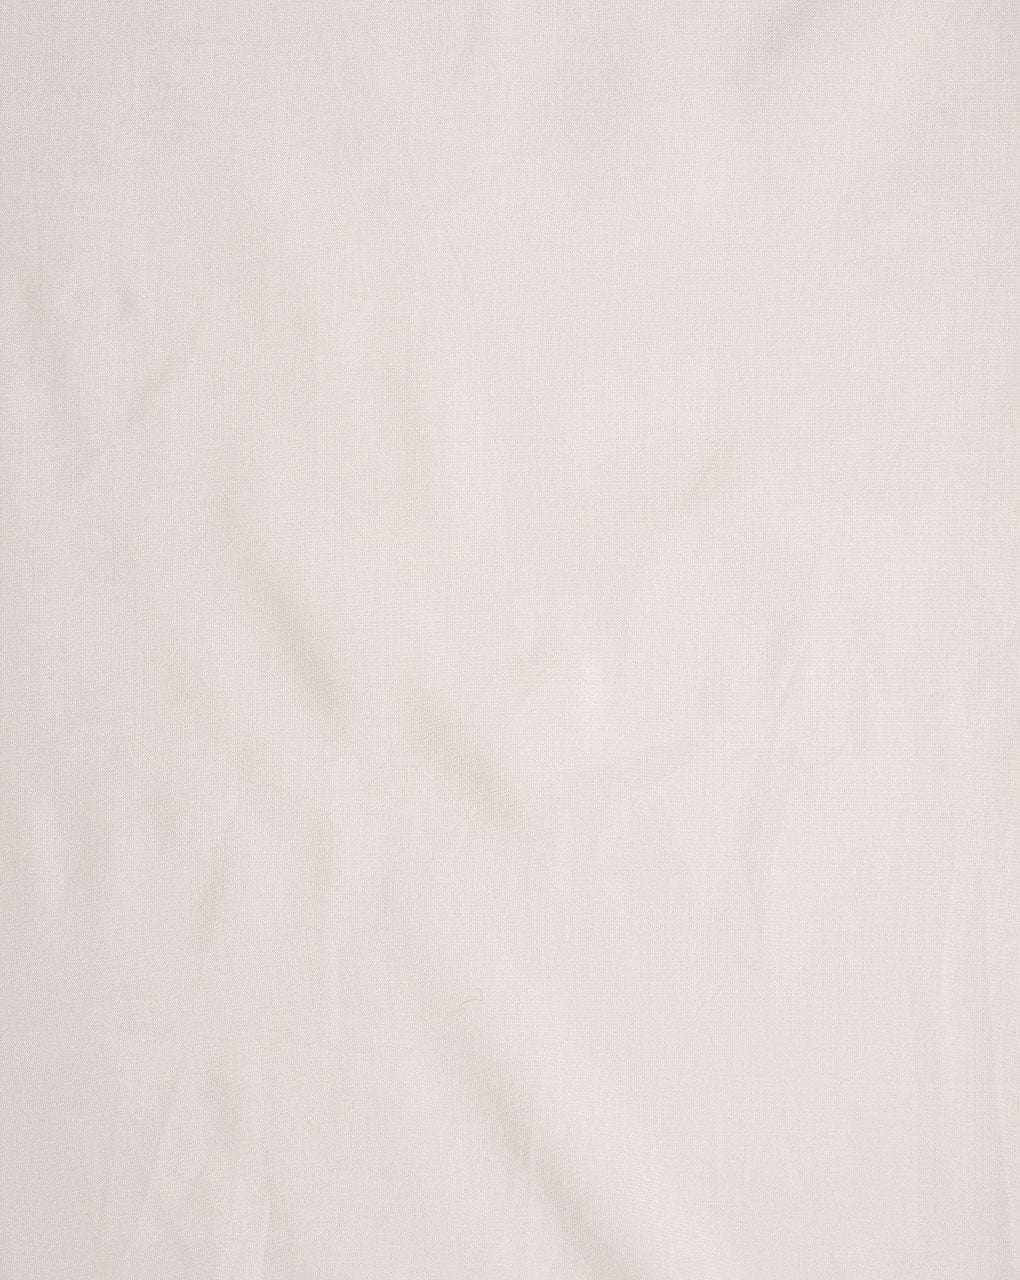 (40 X 40) Dyeable Liva Viscose ( Super Liva ) Fabric - Fabriclore.com